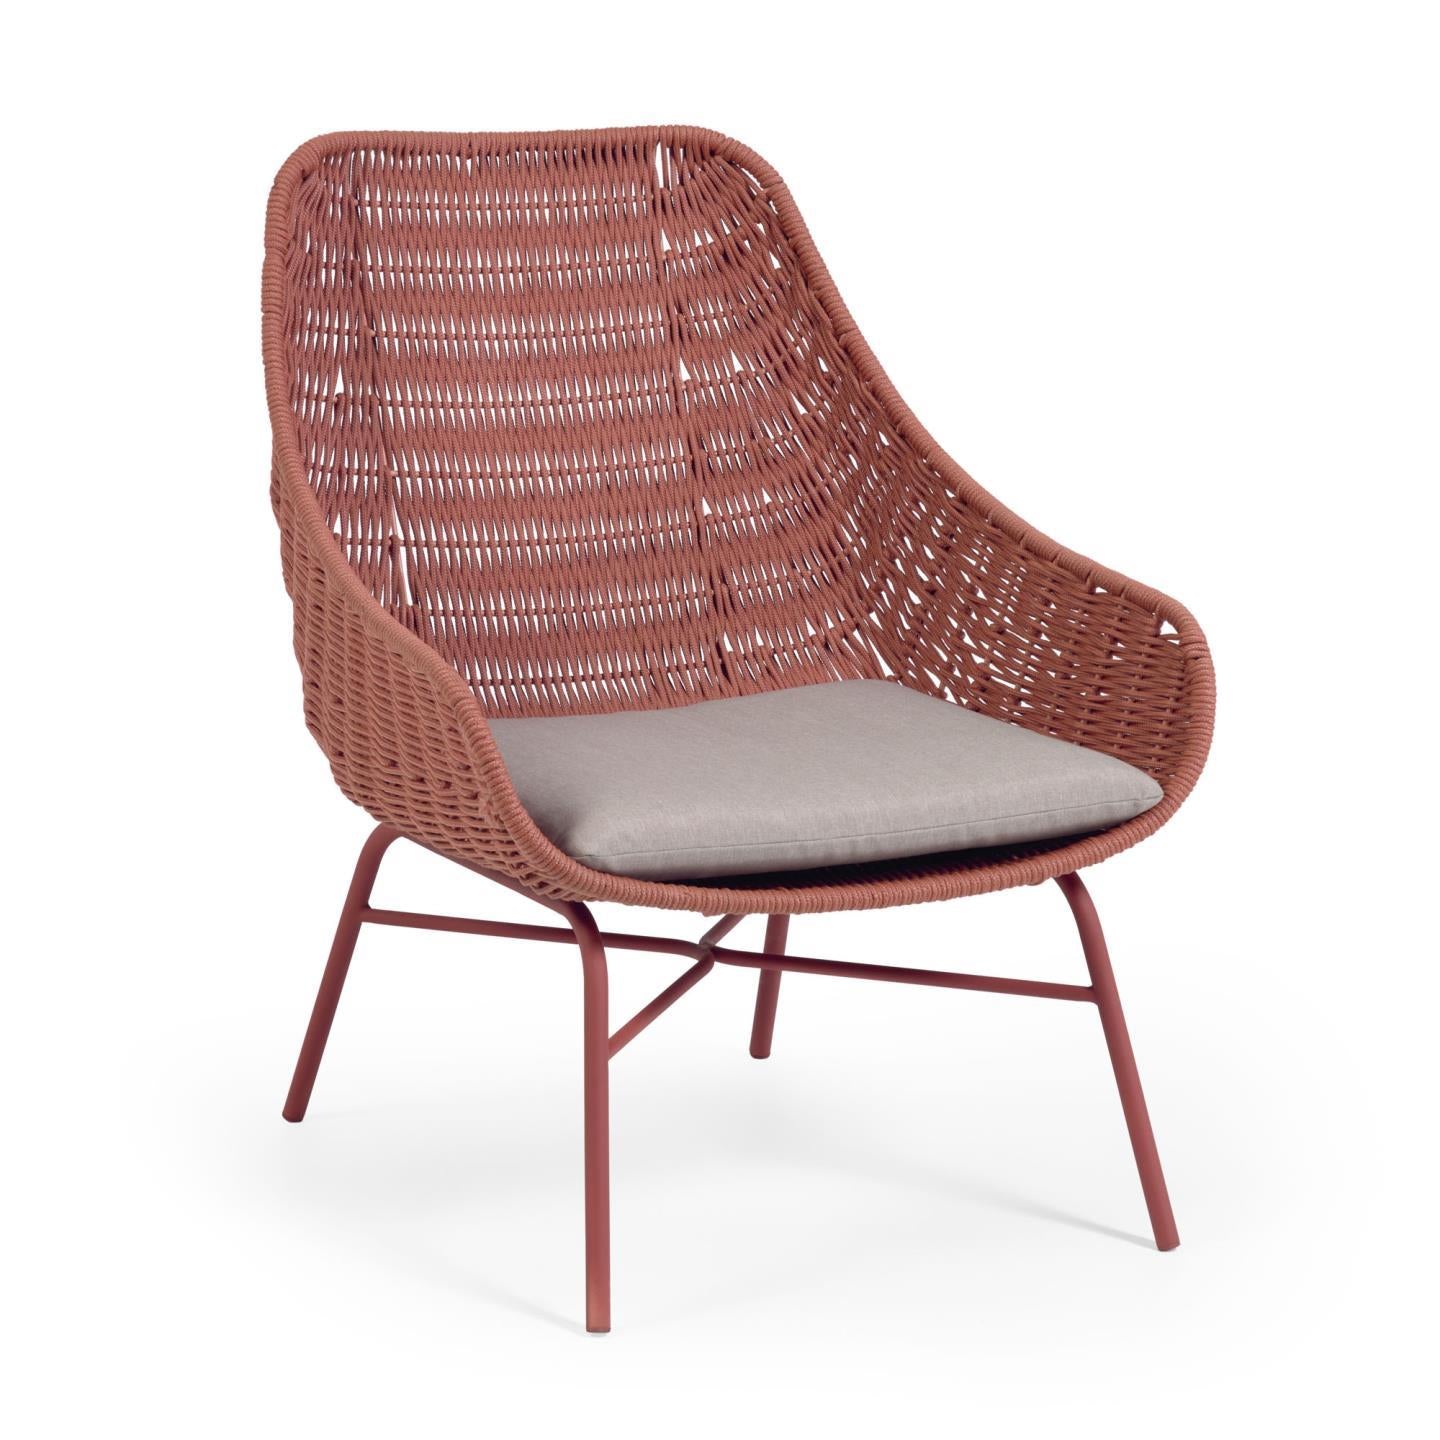 Abeli terracotta cord armchair with galvanised steel legs.